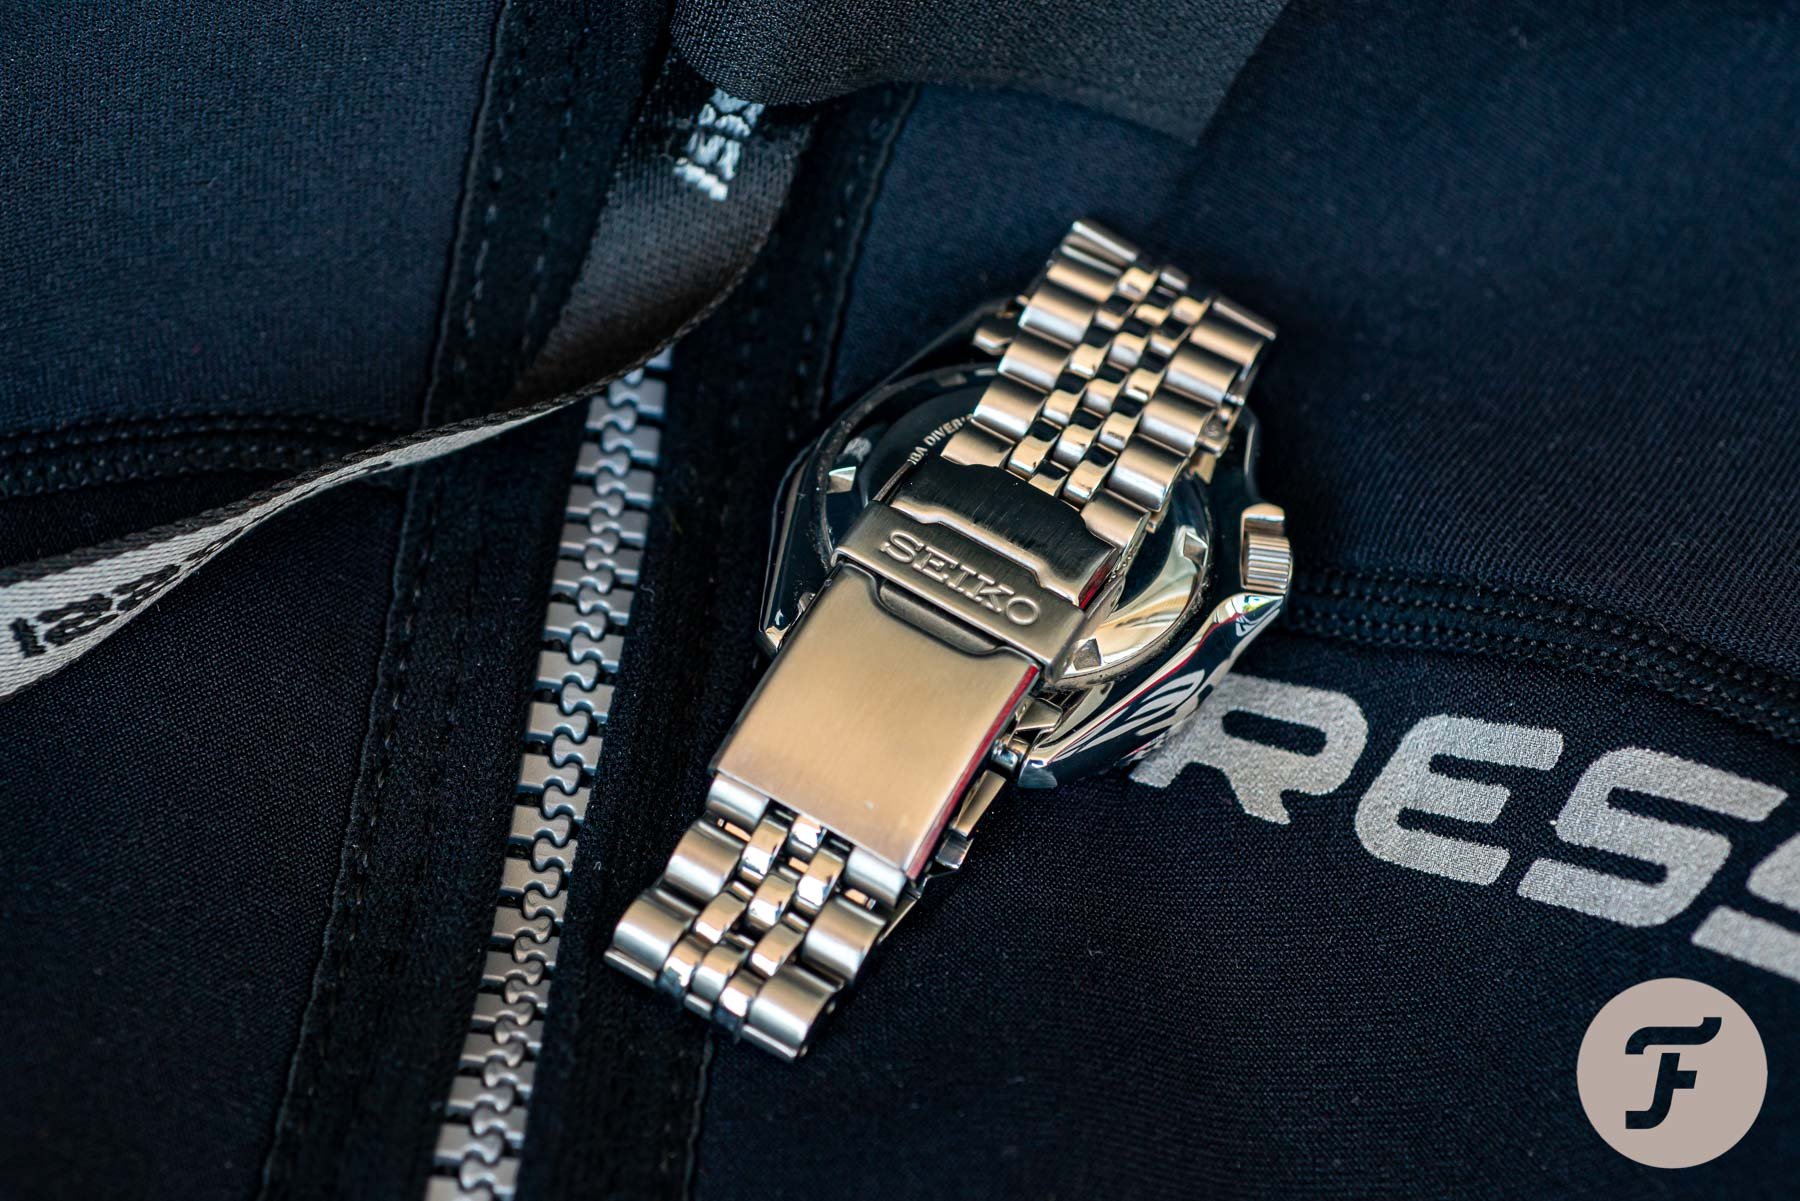 Zipper Slider Replacement Kits - Wrist (RC and Darien)